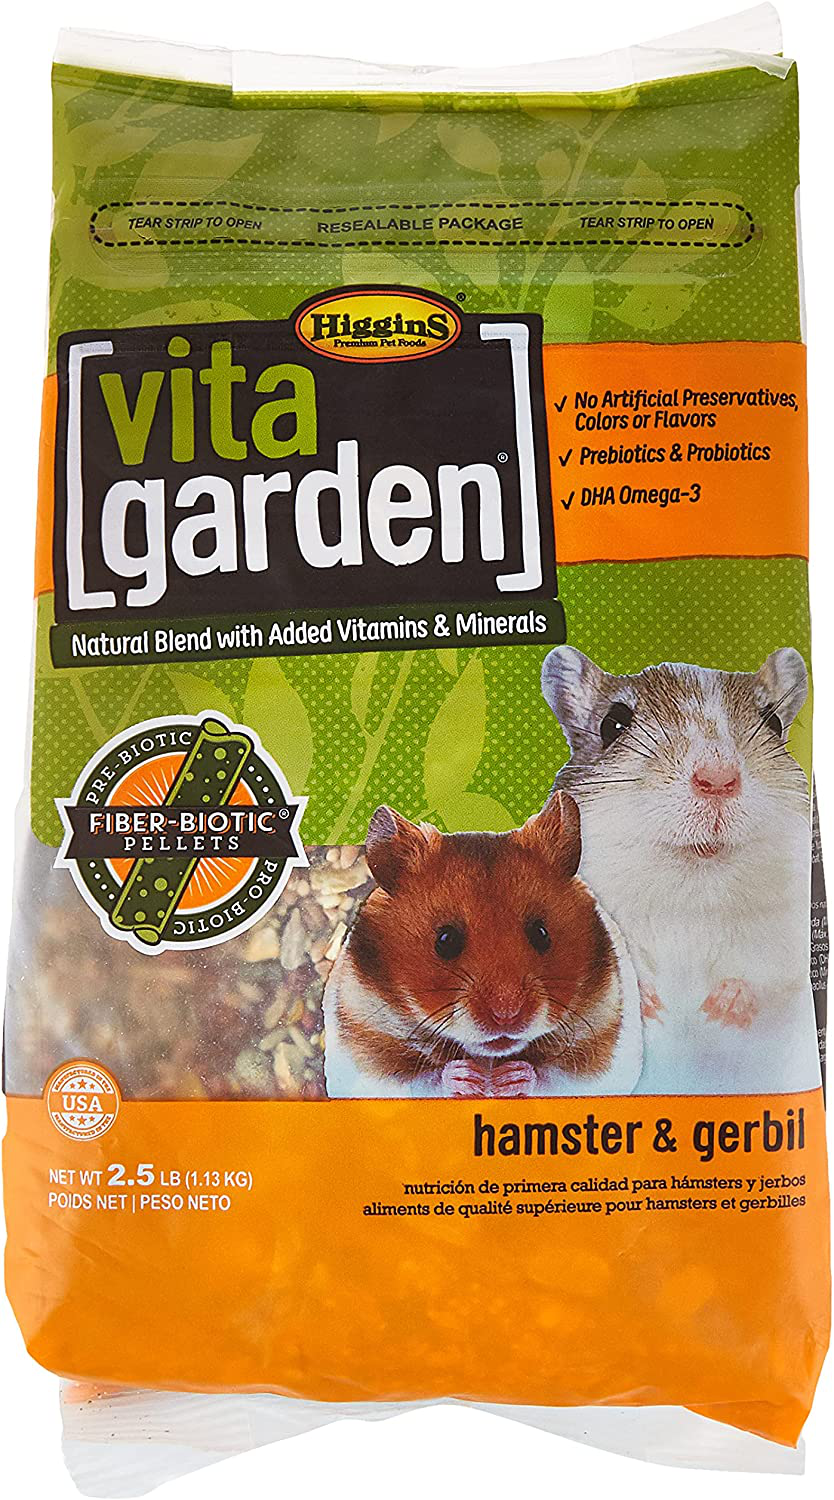 Higgins Vita Garden Hamster & Gerbil Food Animals & Pet Supplies > Pet Supplies > Small Animal Supplies > Small Animal Food Higgins   